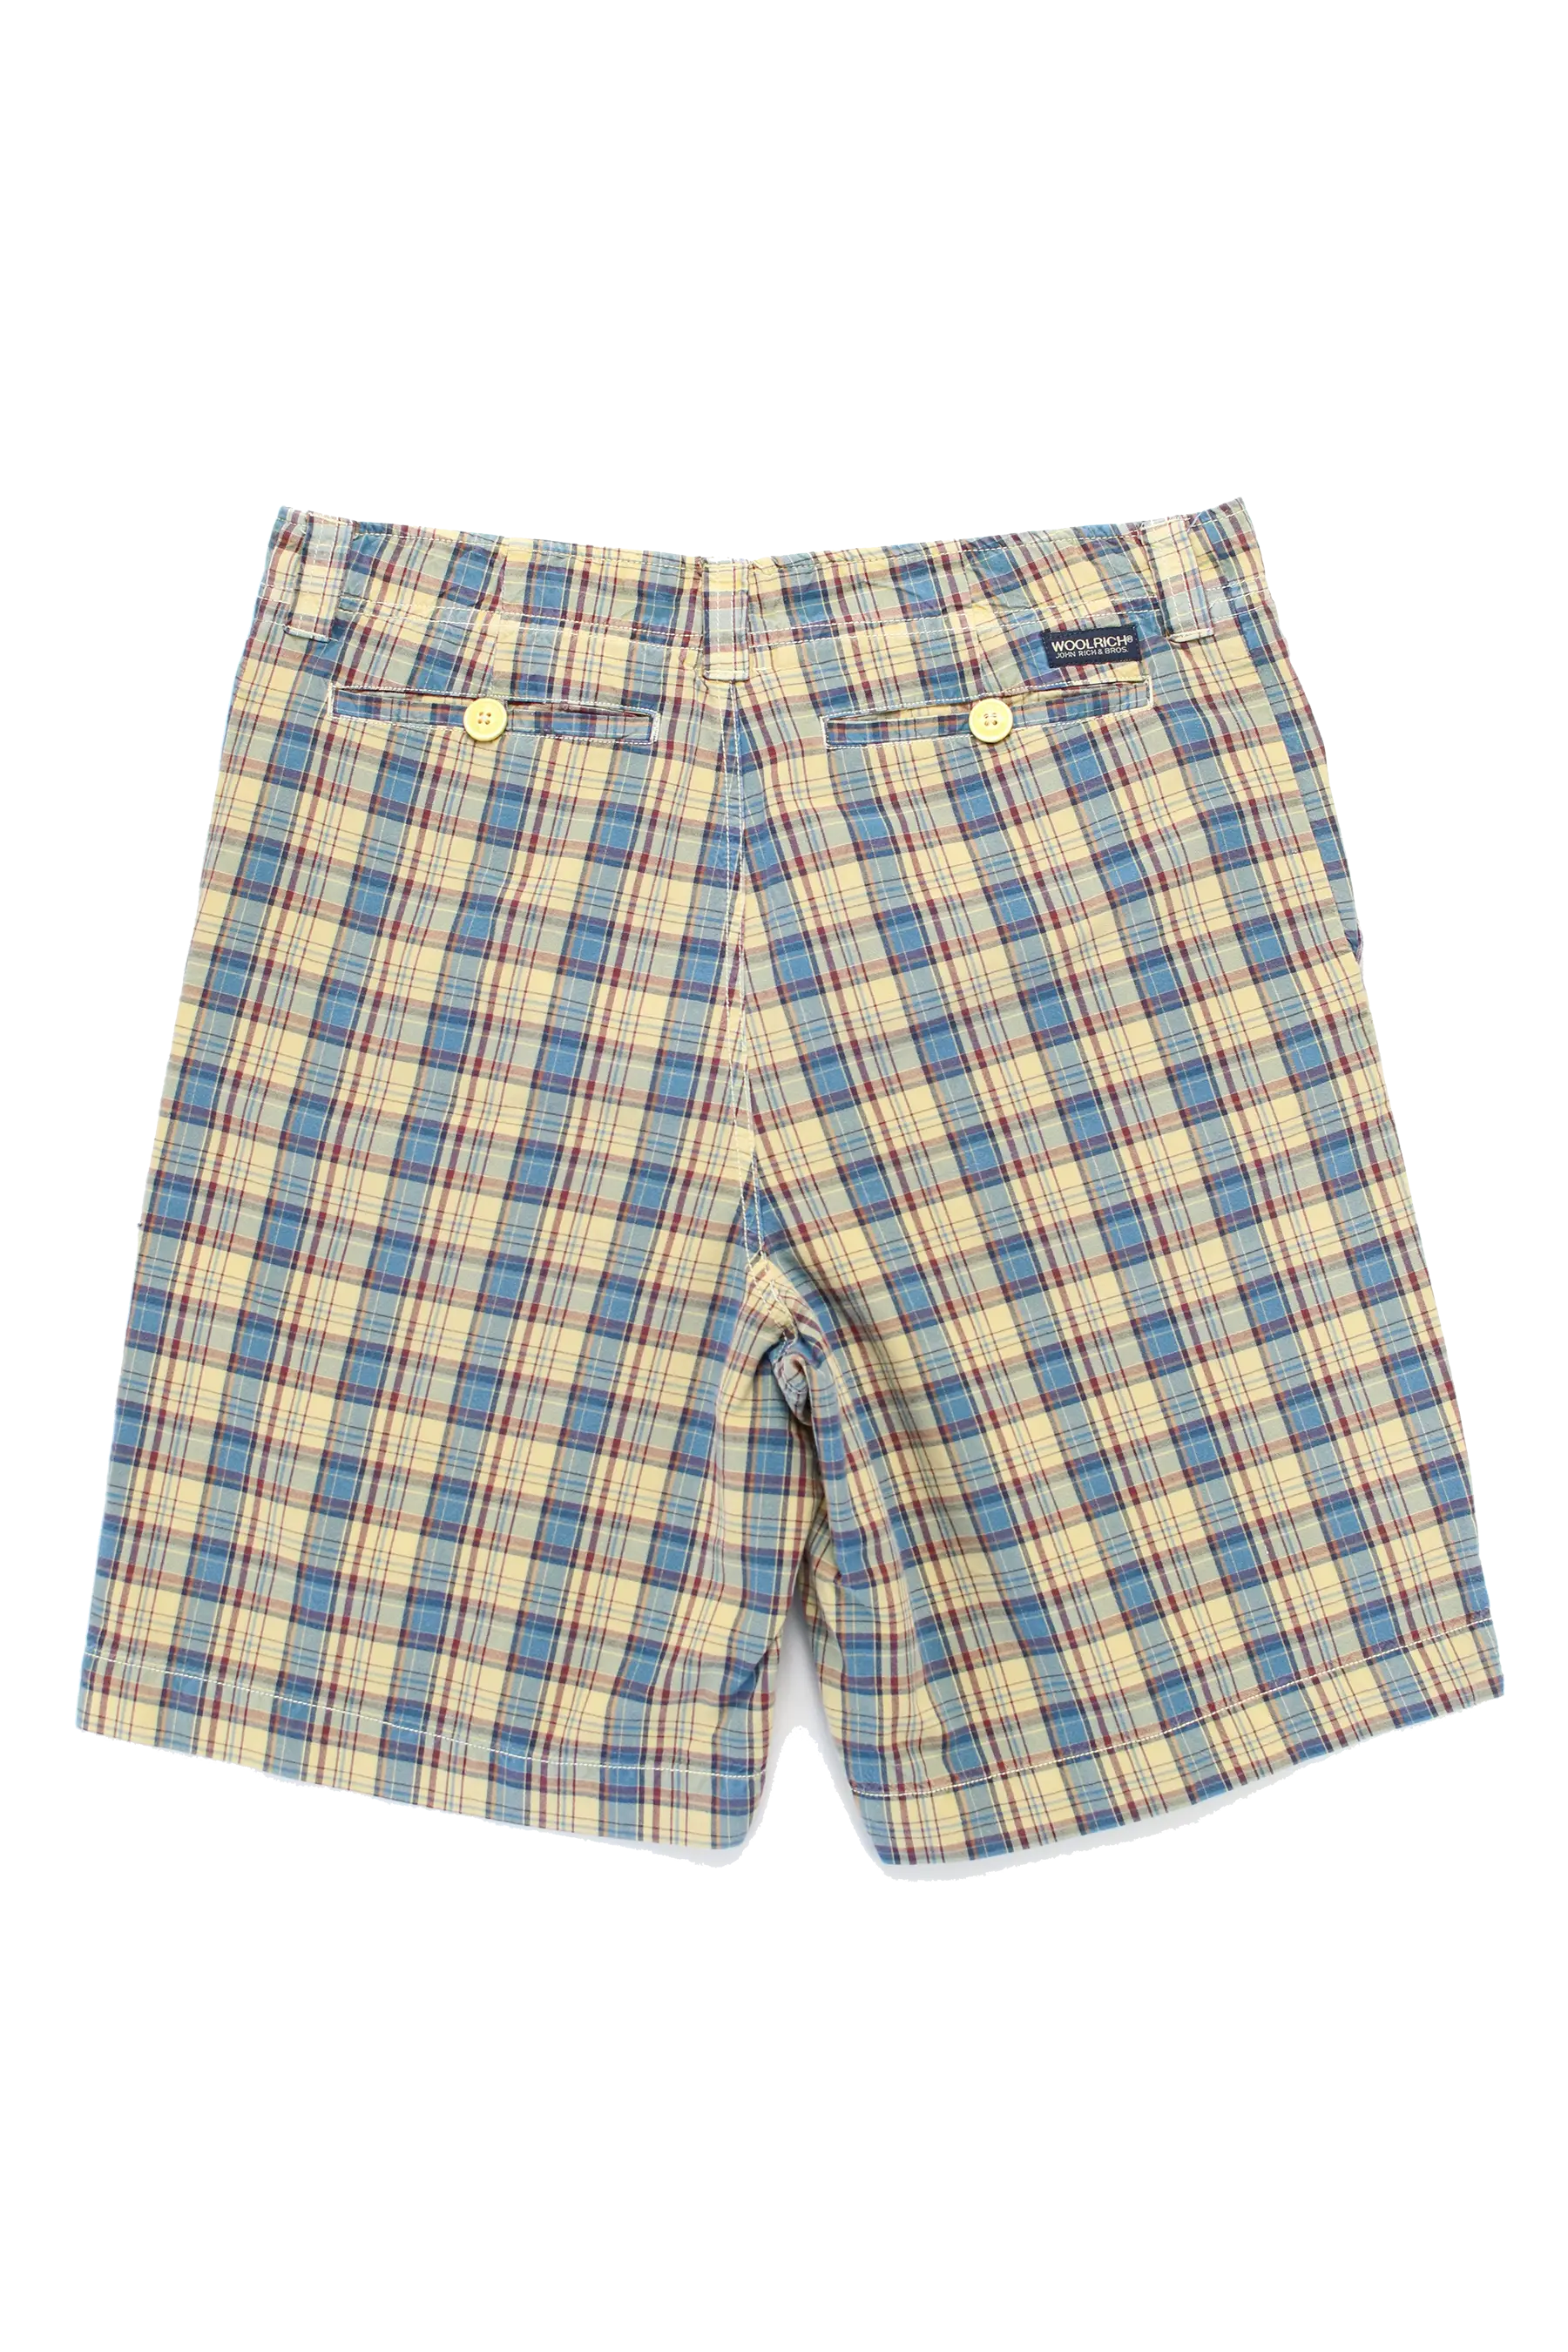 Woolrich Checkered Shorts